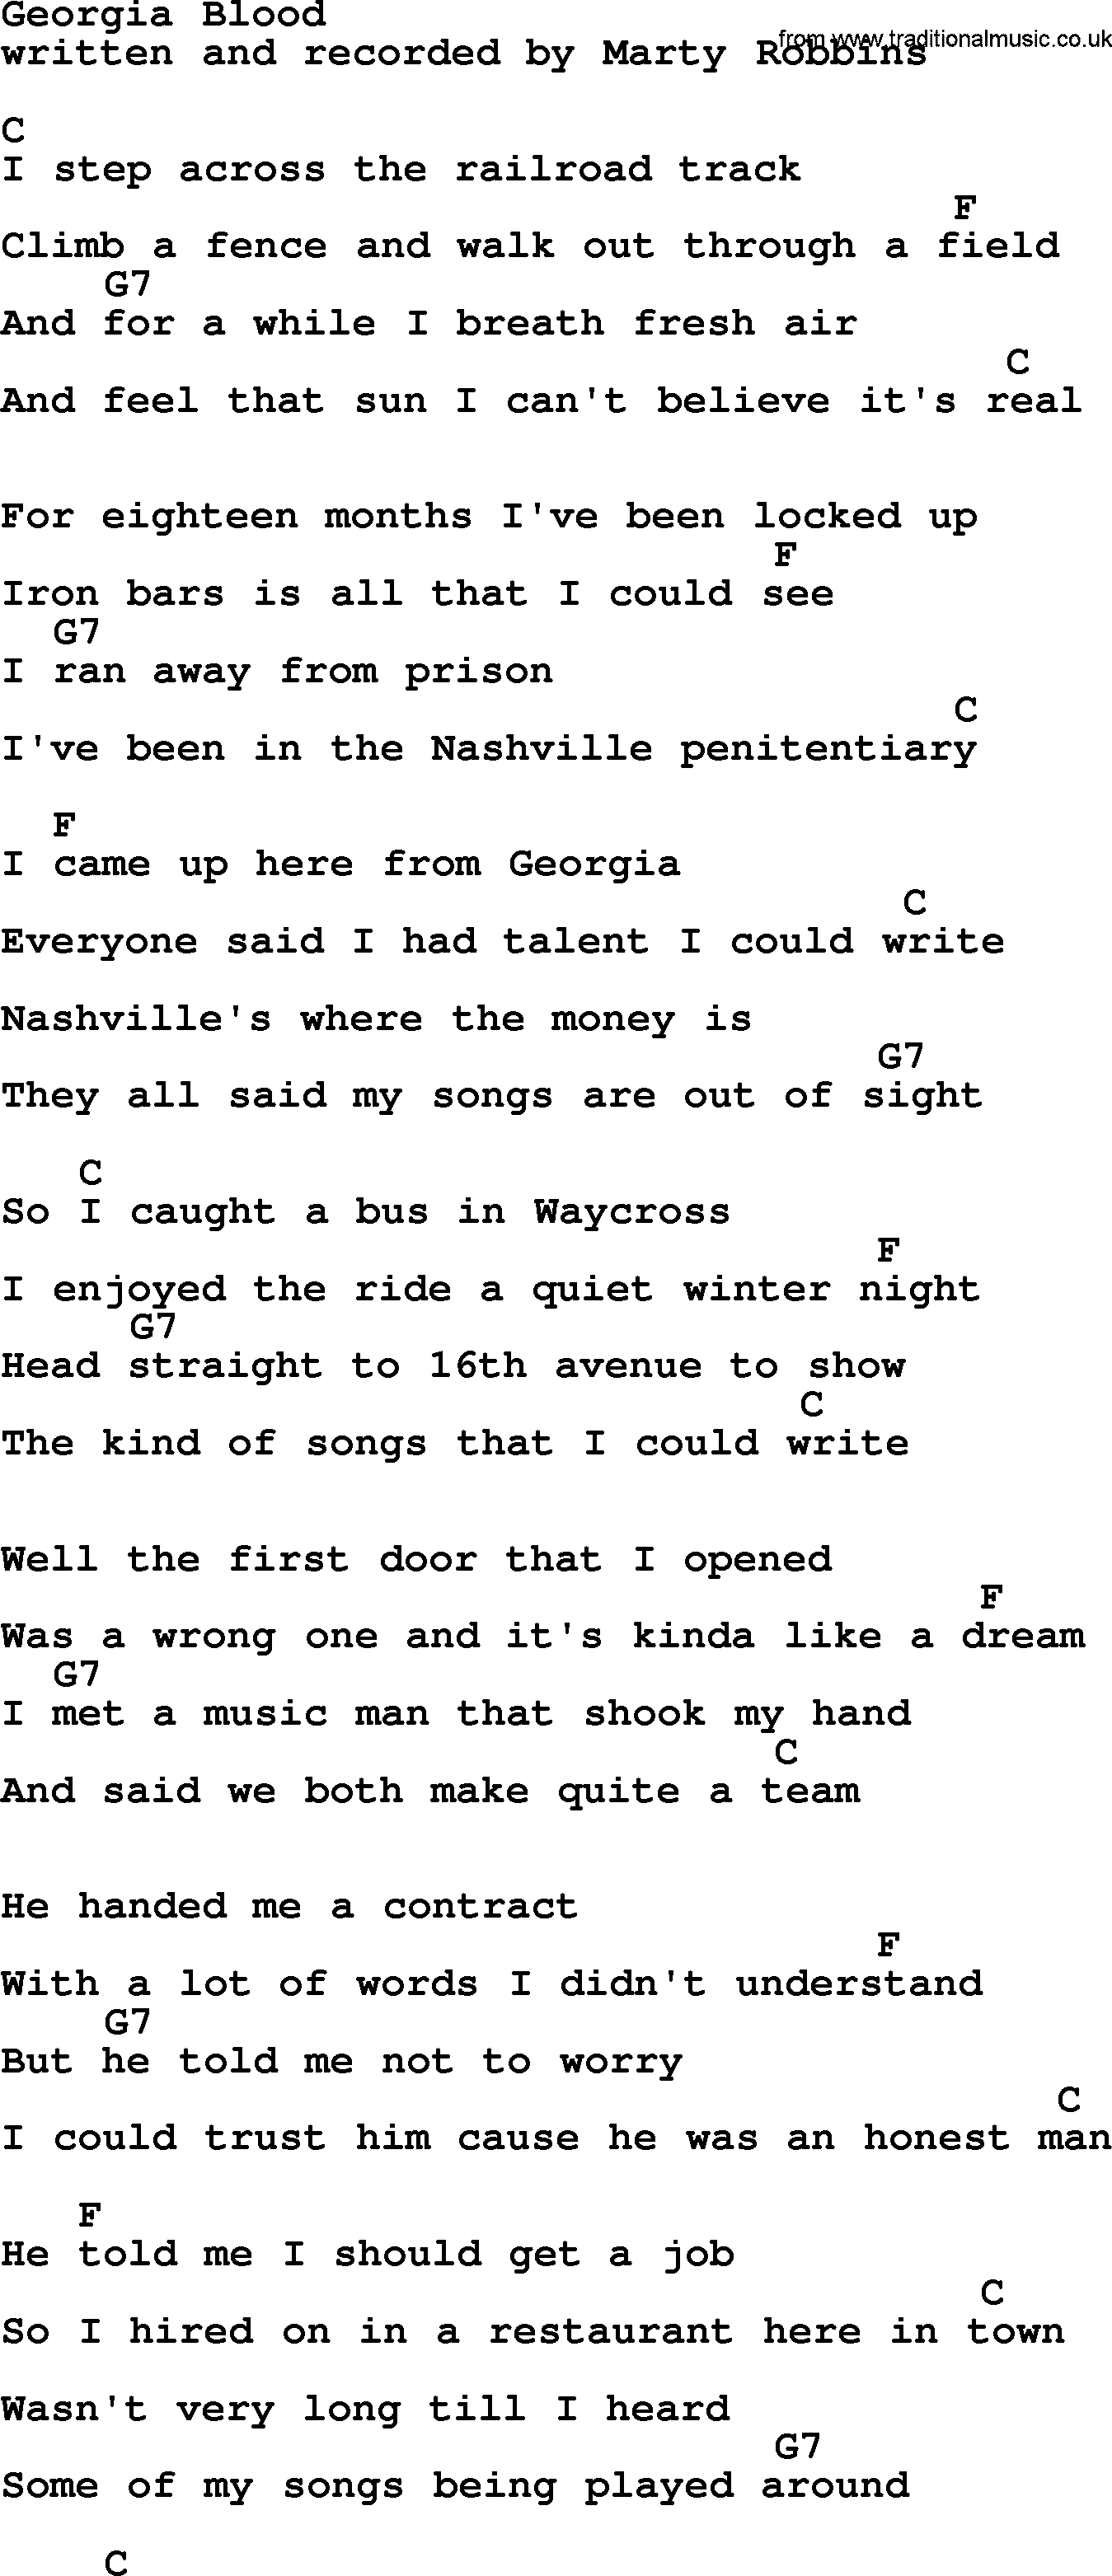 Marty Robbins song: Georgia Blood, lyrics and chords